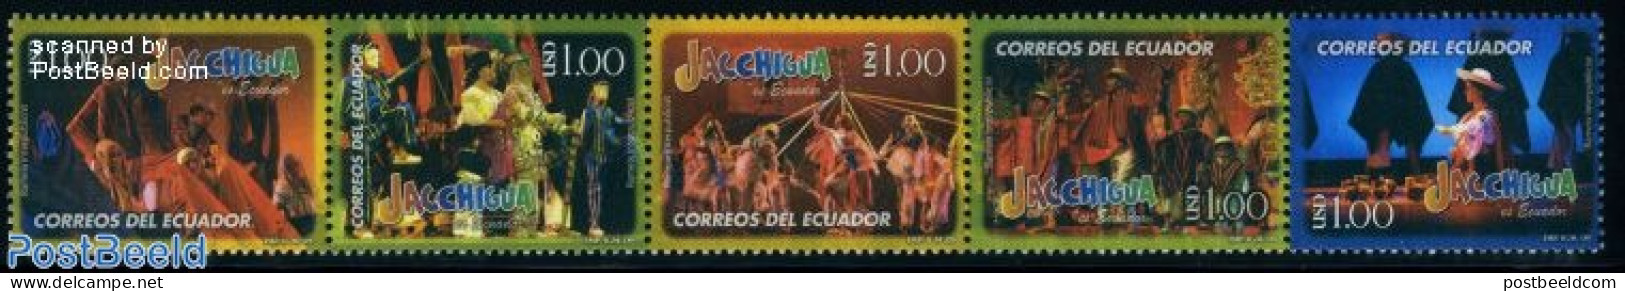 Ecuador 2009 Jacchigua Dance Group 5v [::::], Mint NH, Performance Art - Various - Dance & Ballet - Folklore - Danse